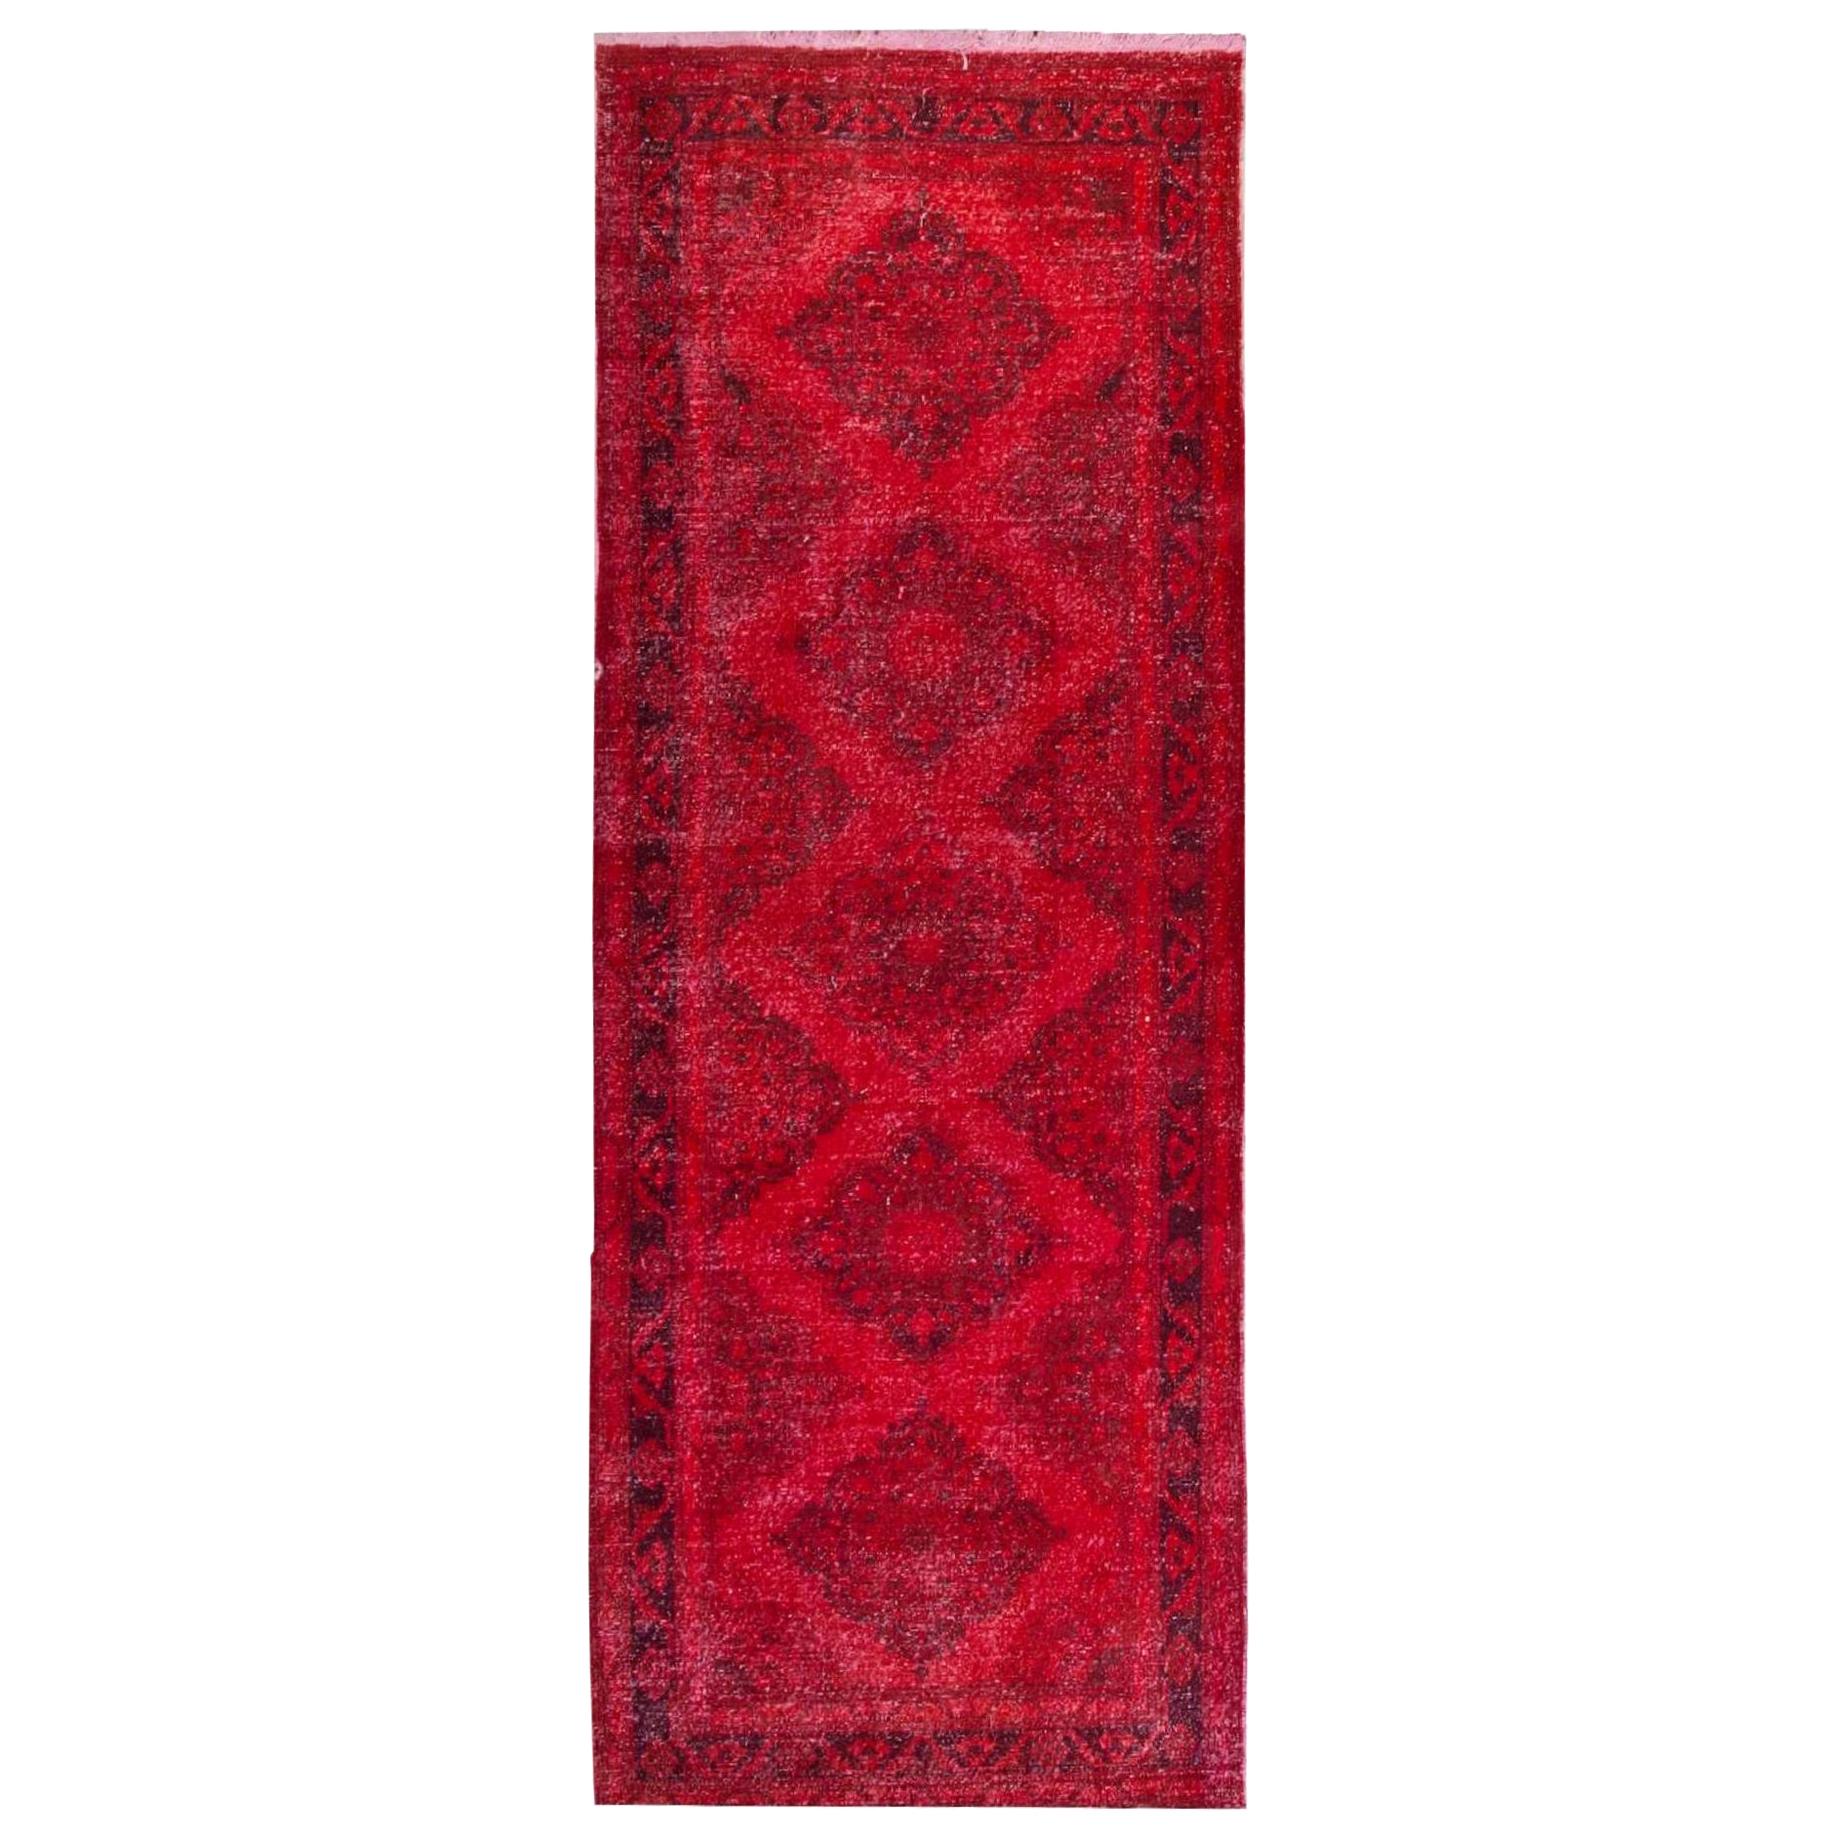 4.6x12.7 Ft Vintage Turkish Hallway Runner Rug dyed in Red 4 Modern Interiors